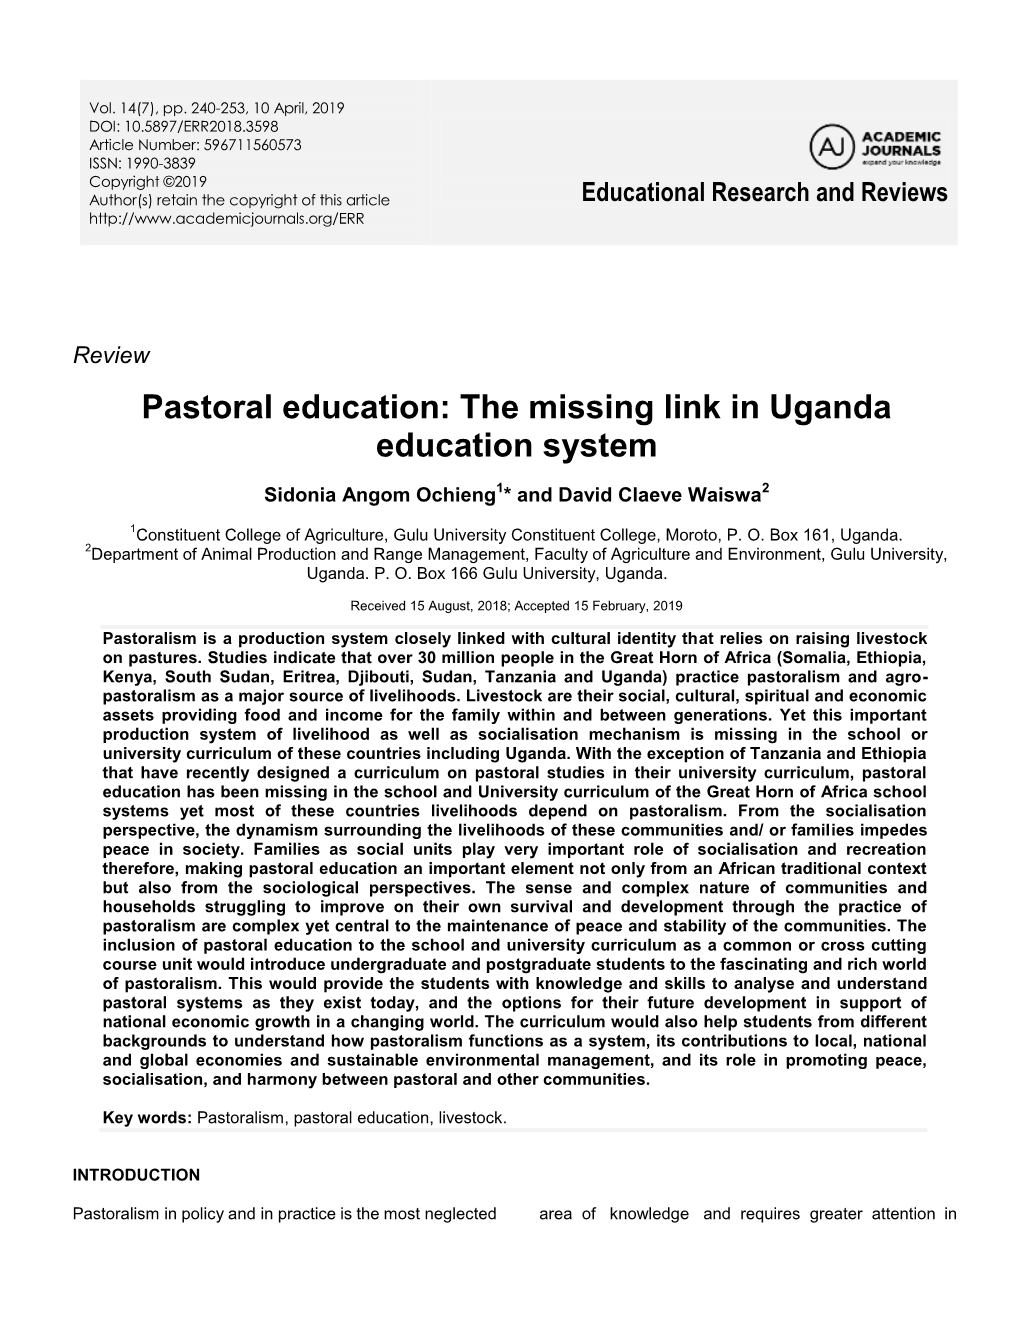 Pastoral Education: the Missing Link in Uganda Education System